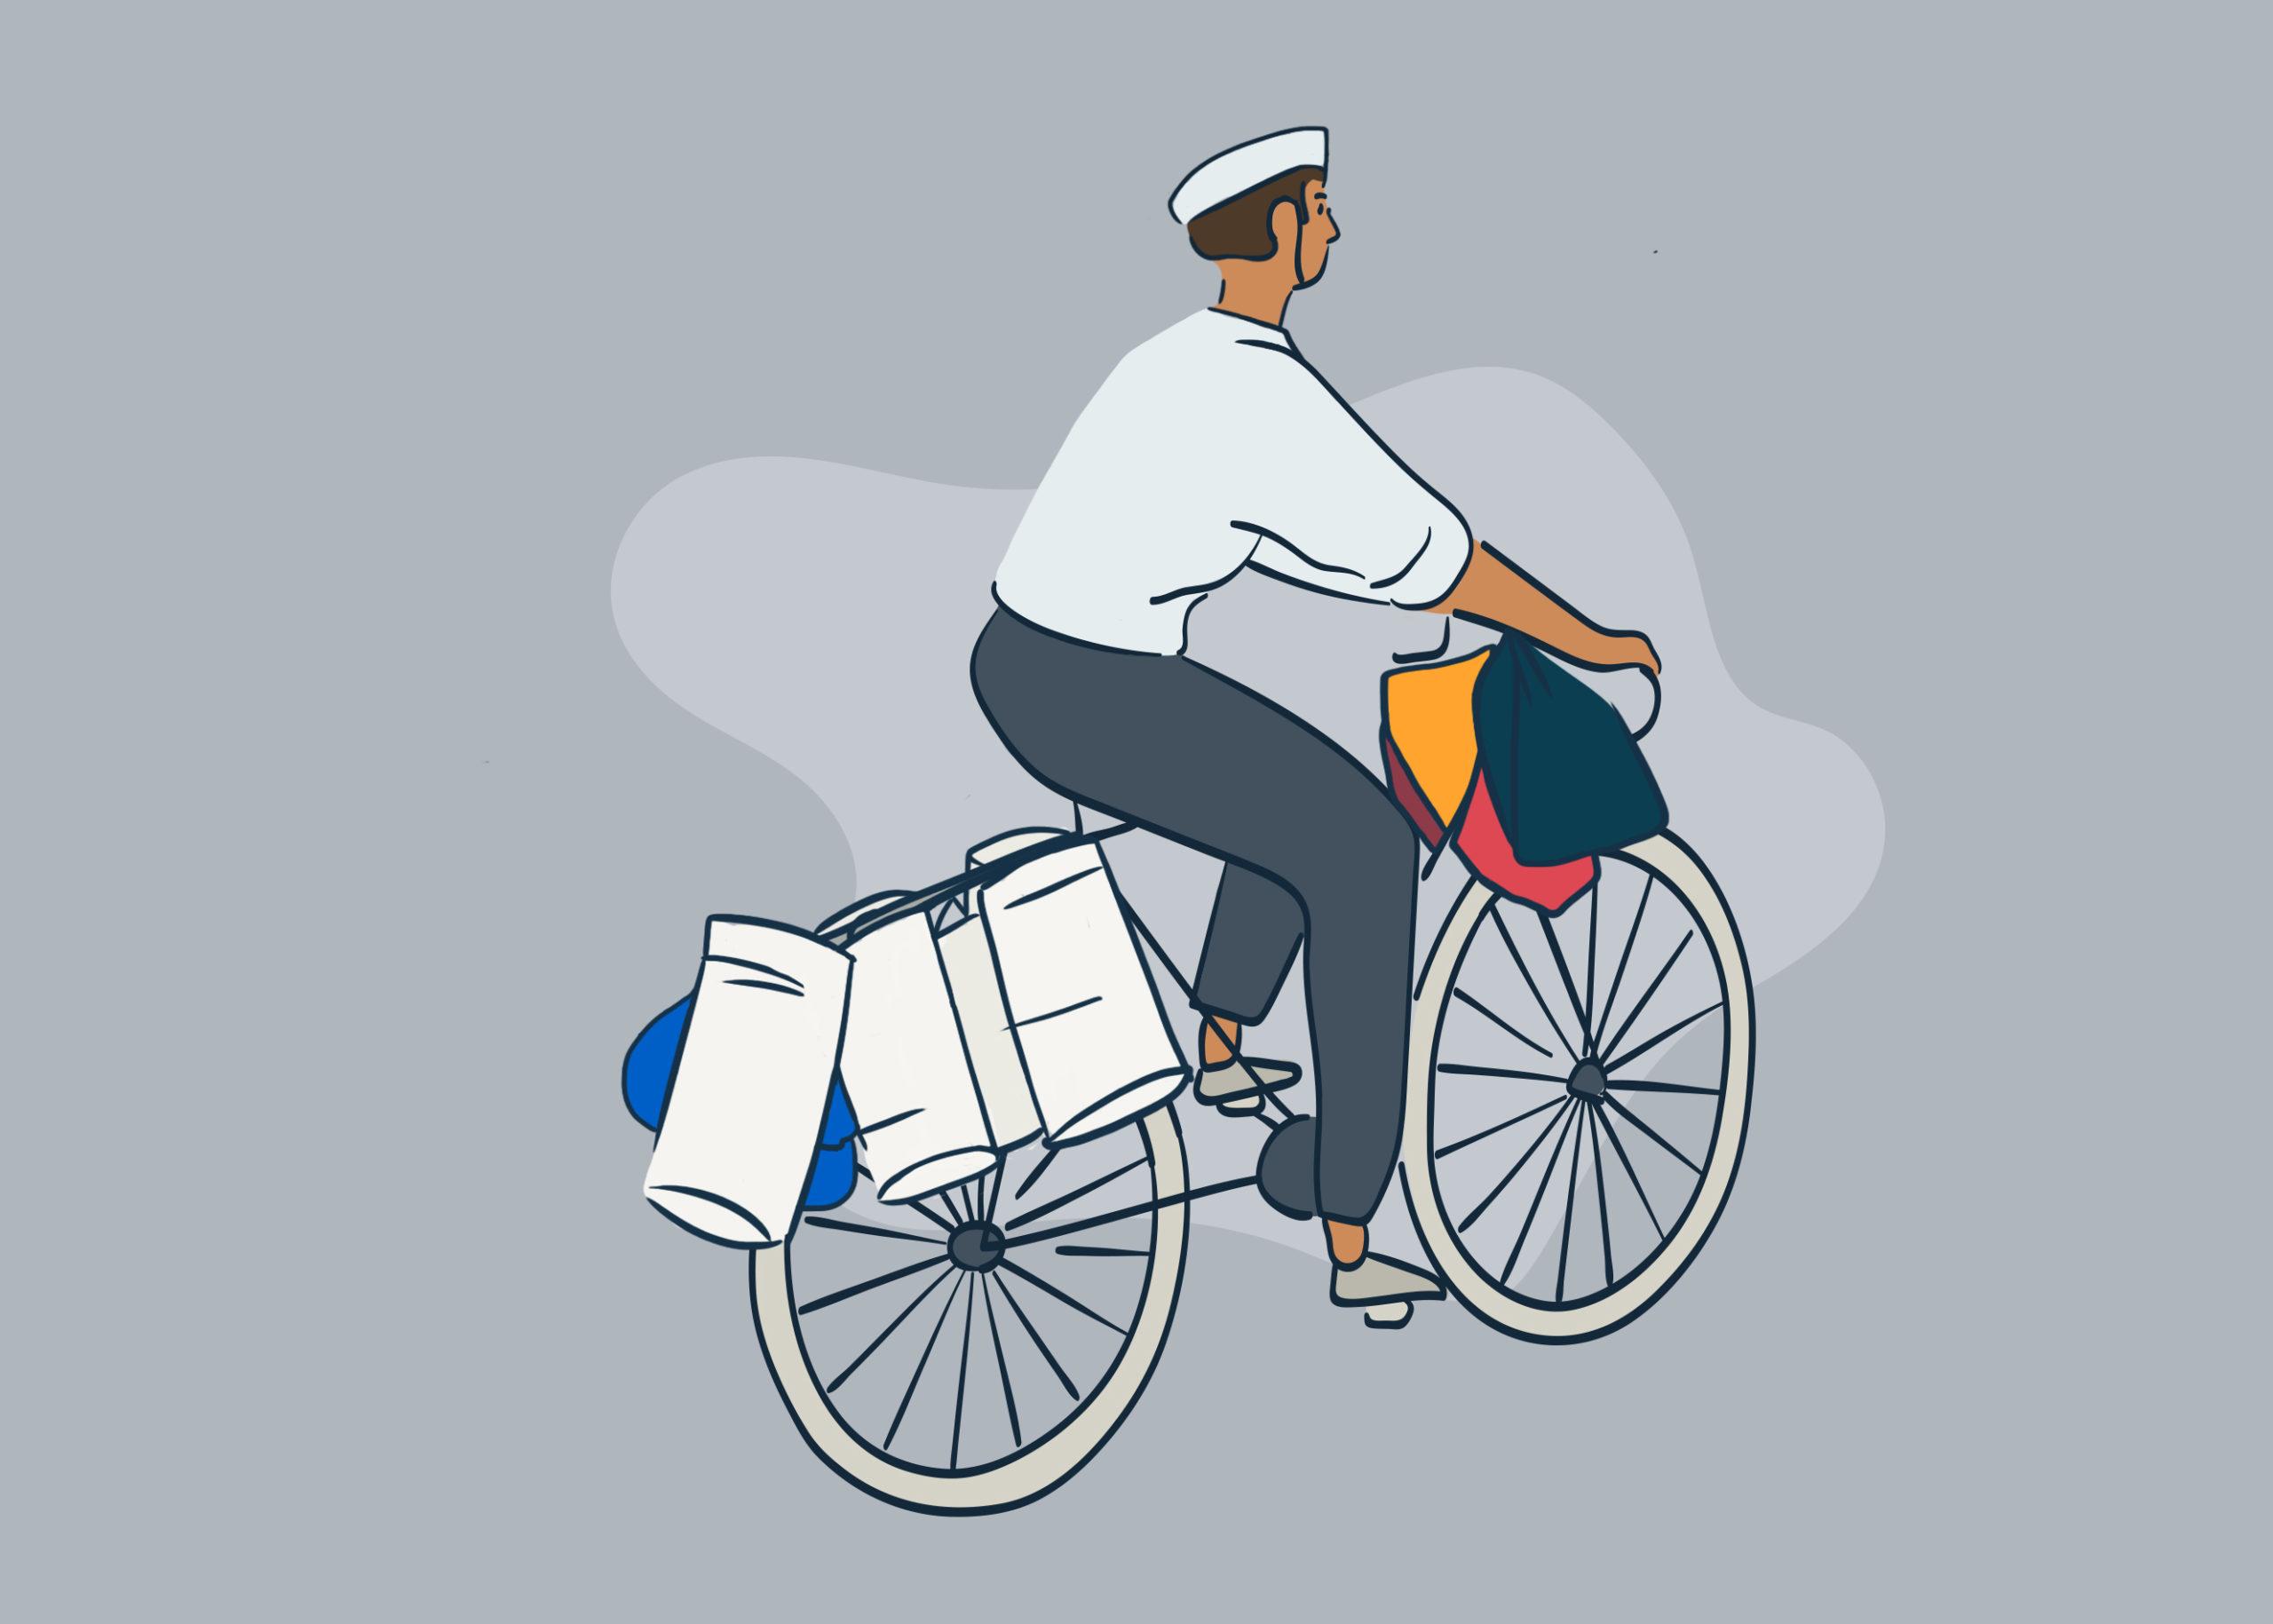 Dabbawala riding a bicycle